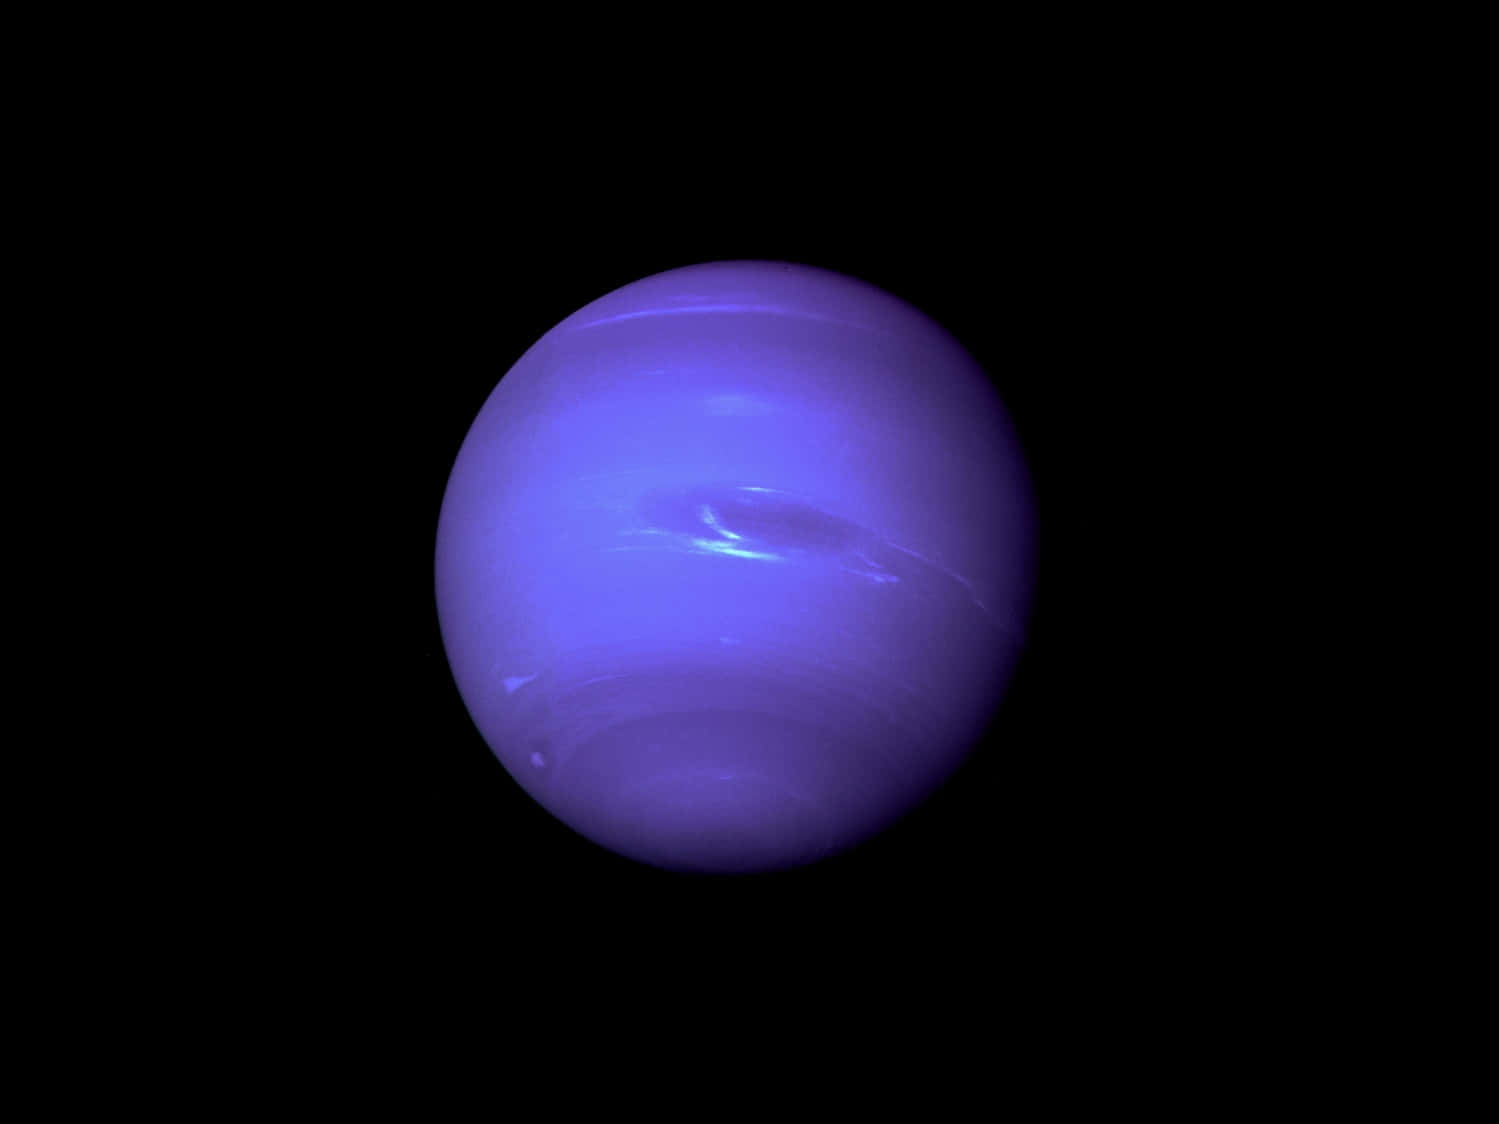 A Brilliant View of the Blue-Green Planet Uranus